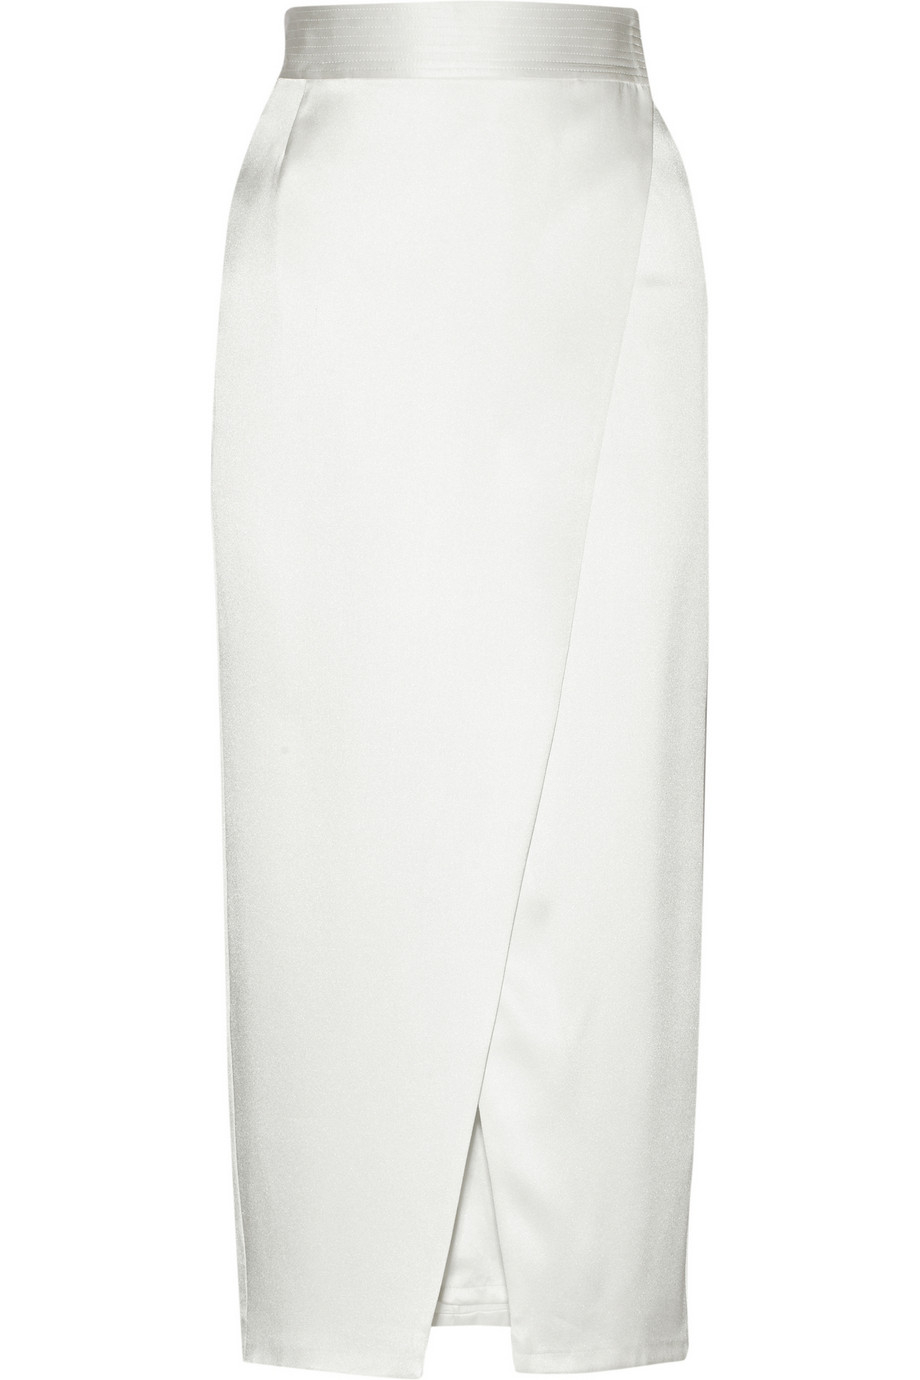 Adam Lippes Silk-Satin Wrap Skirt in White - Lyst